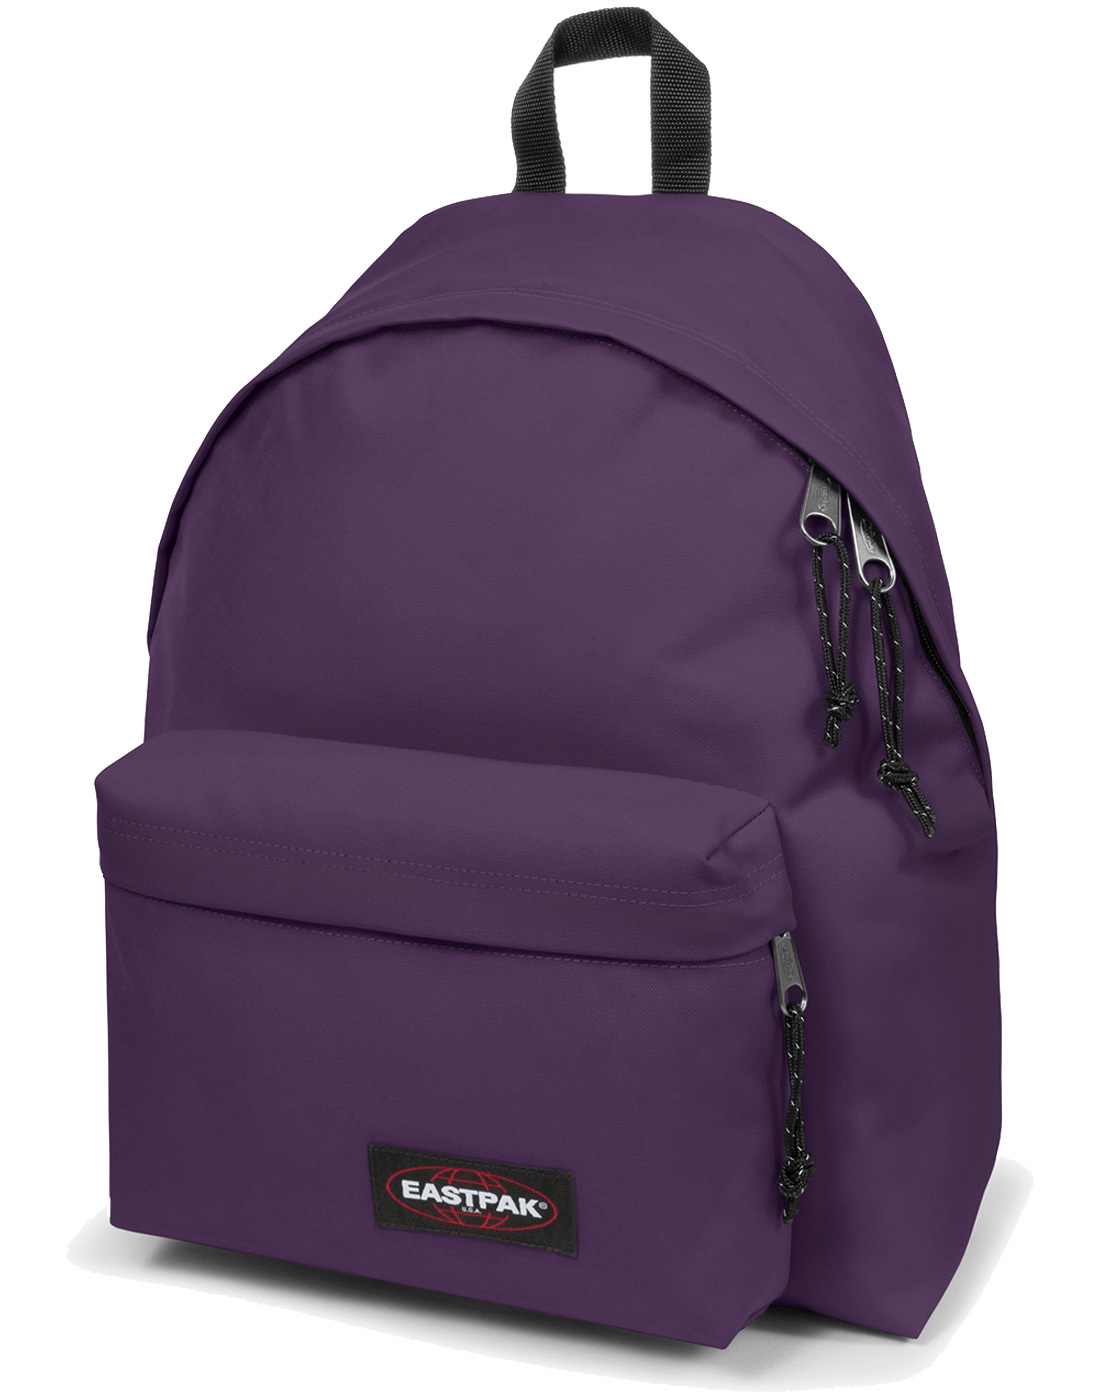 EASTPAK Padded Pak'r Retro Backpack in Magical Purple